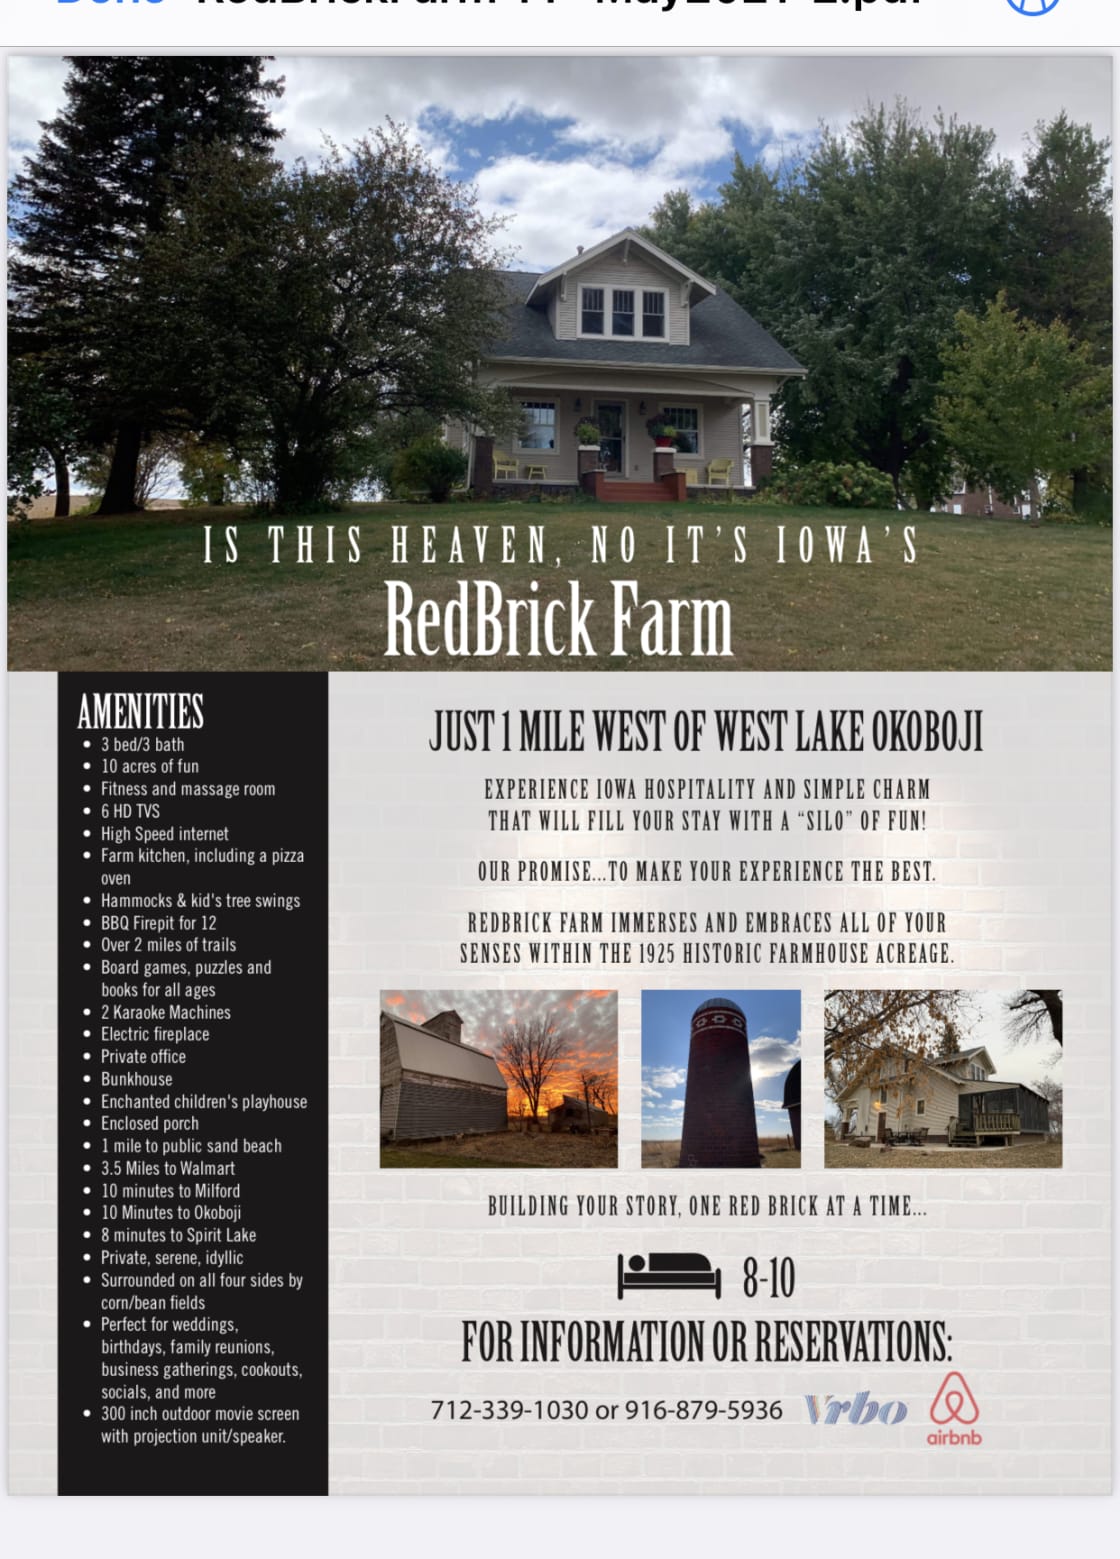 RedBrick Farm